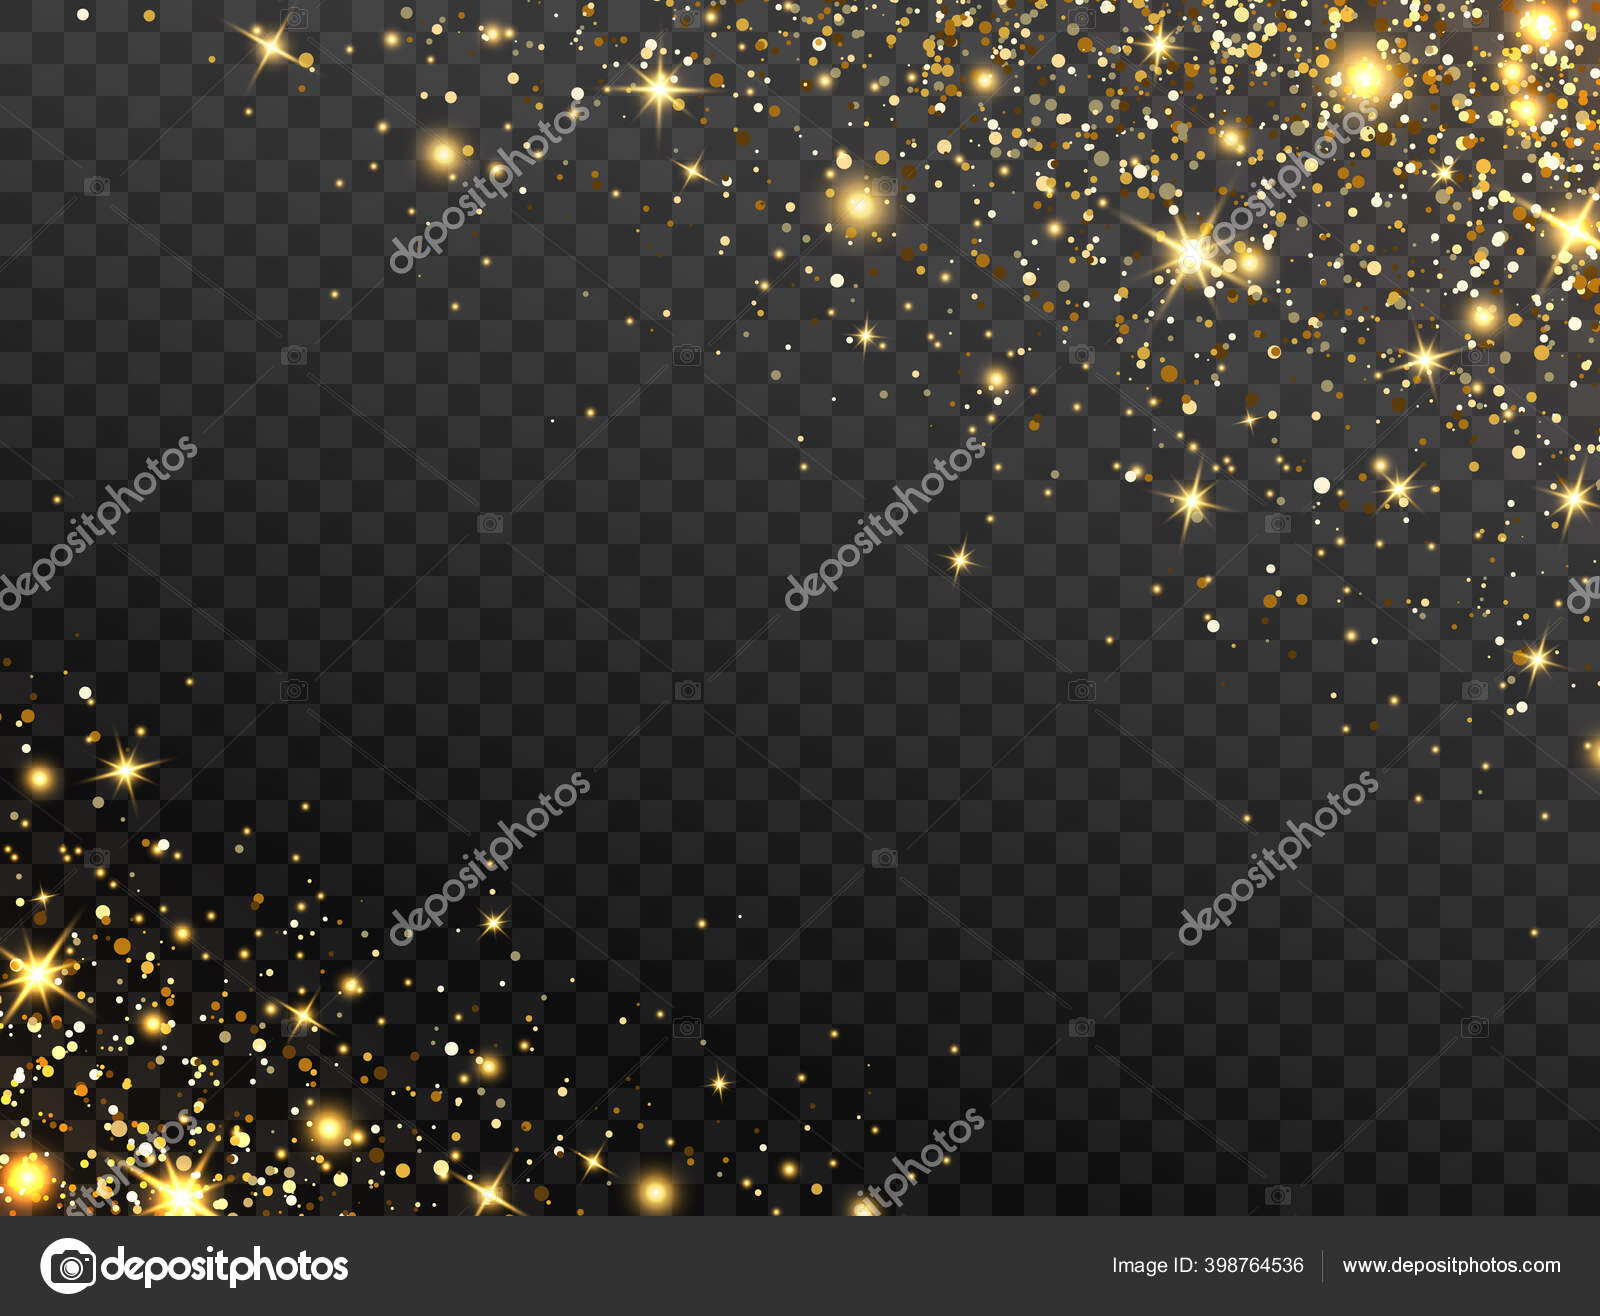 Glitter gold star design element